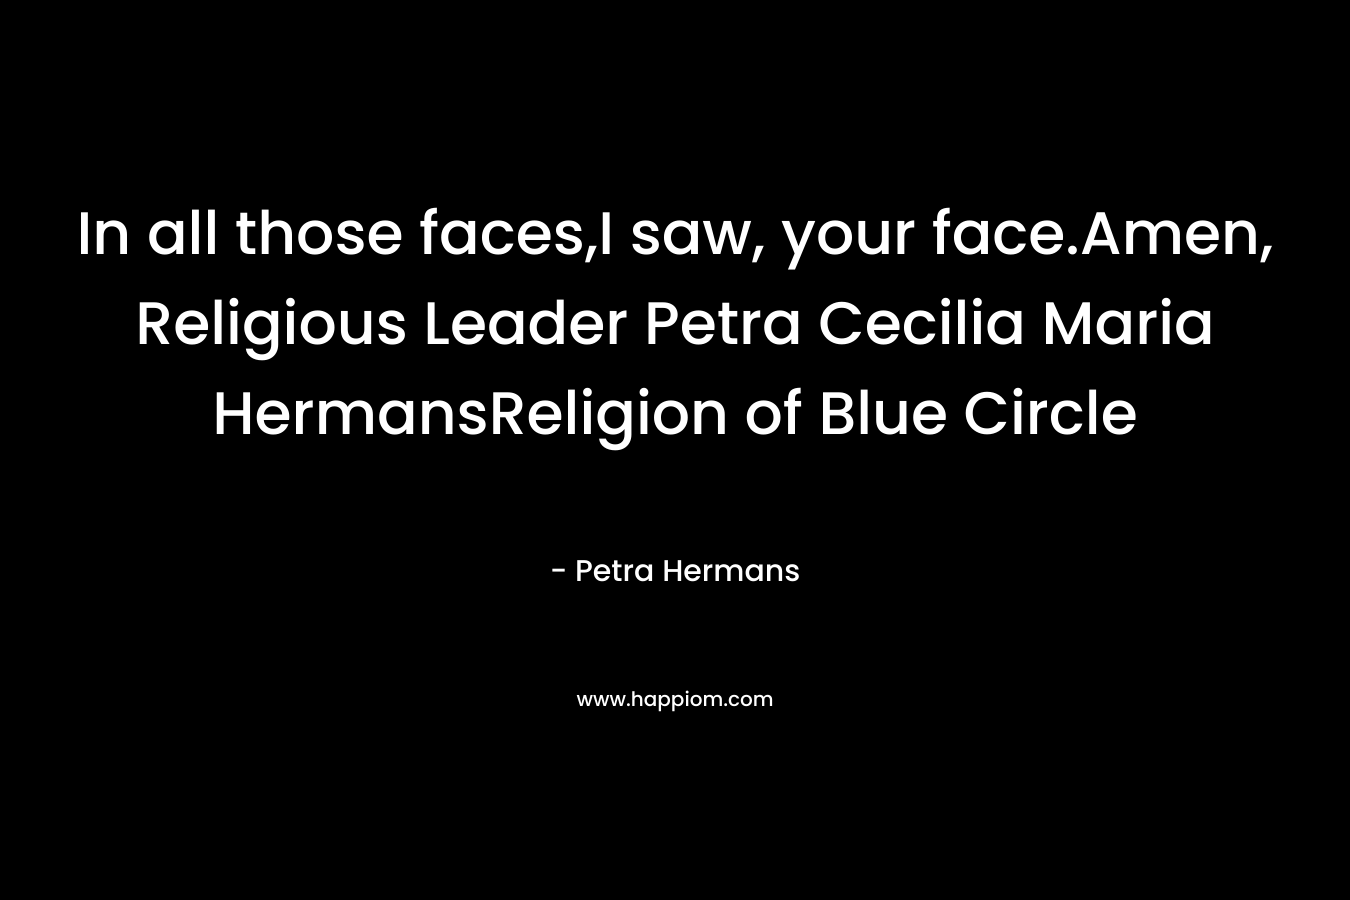 In all those faces,I saw, your face.Amen, Religious Leader Petra Cecilia Maria HermansReligion of Blue Circle